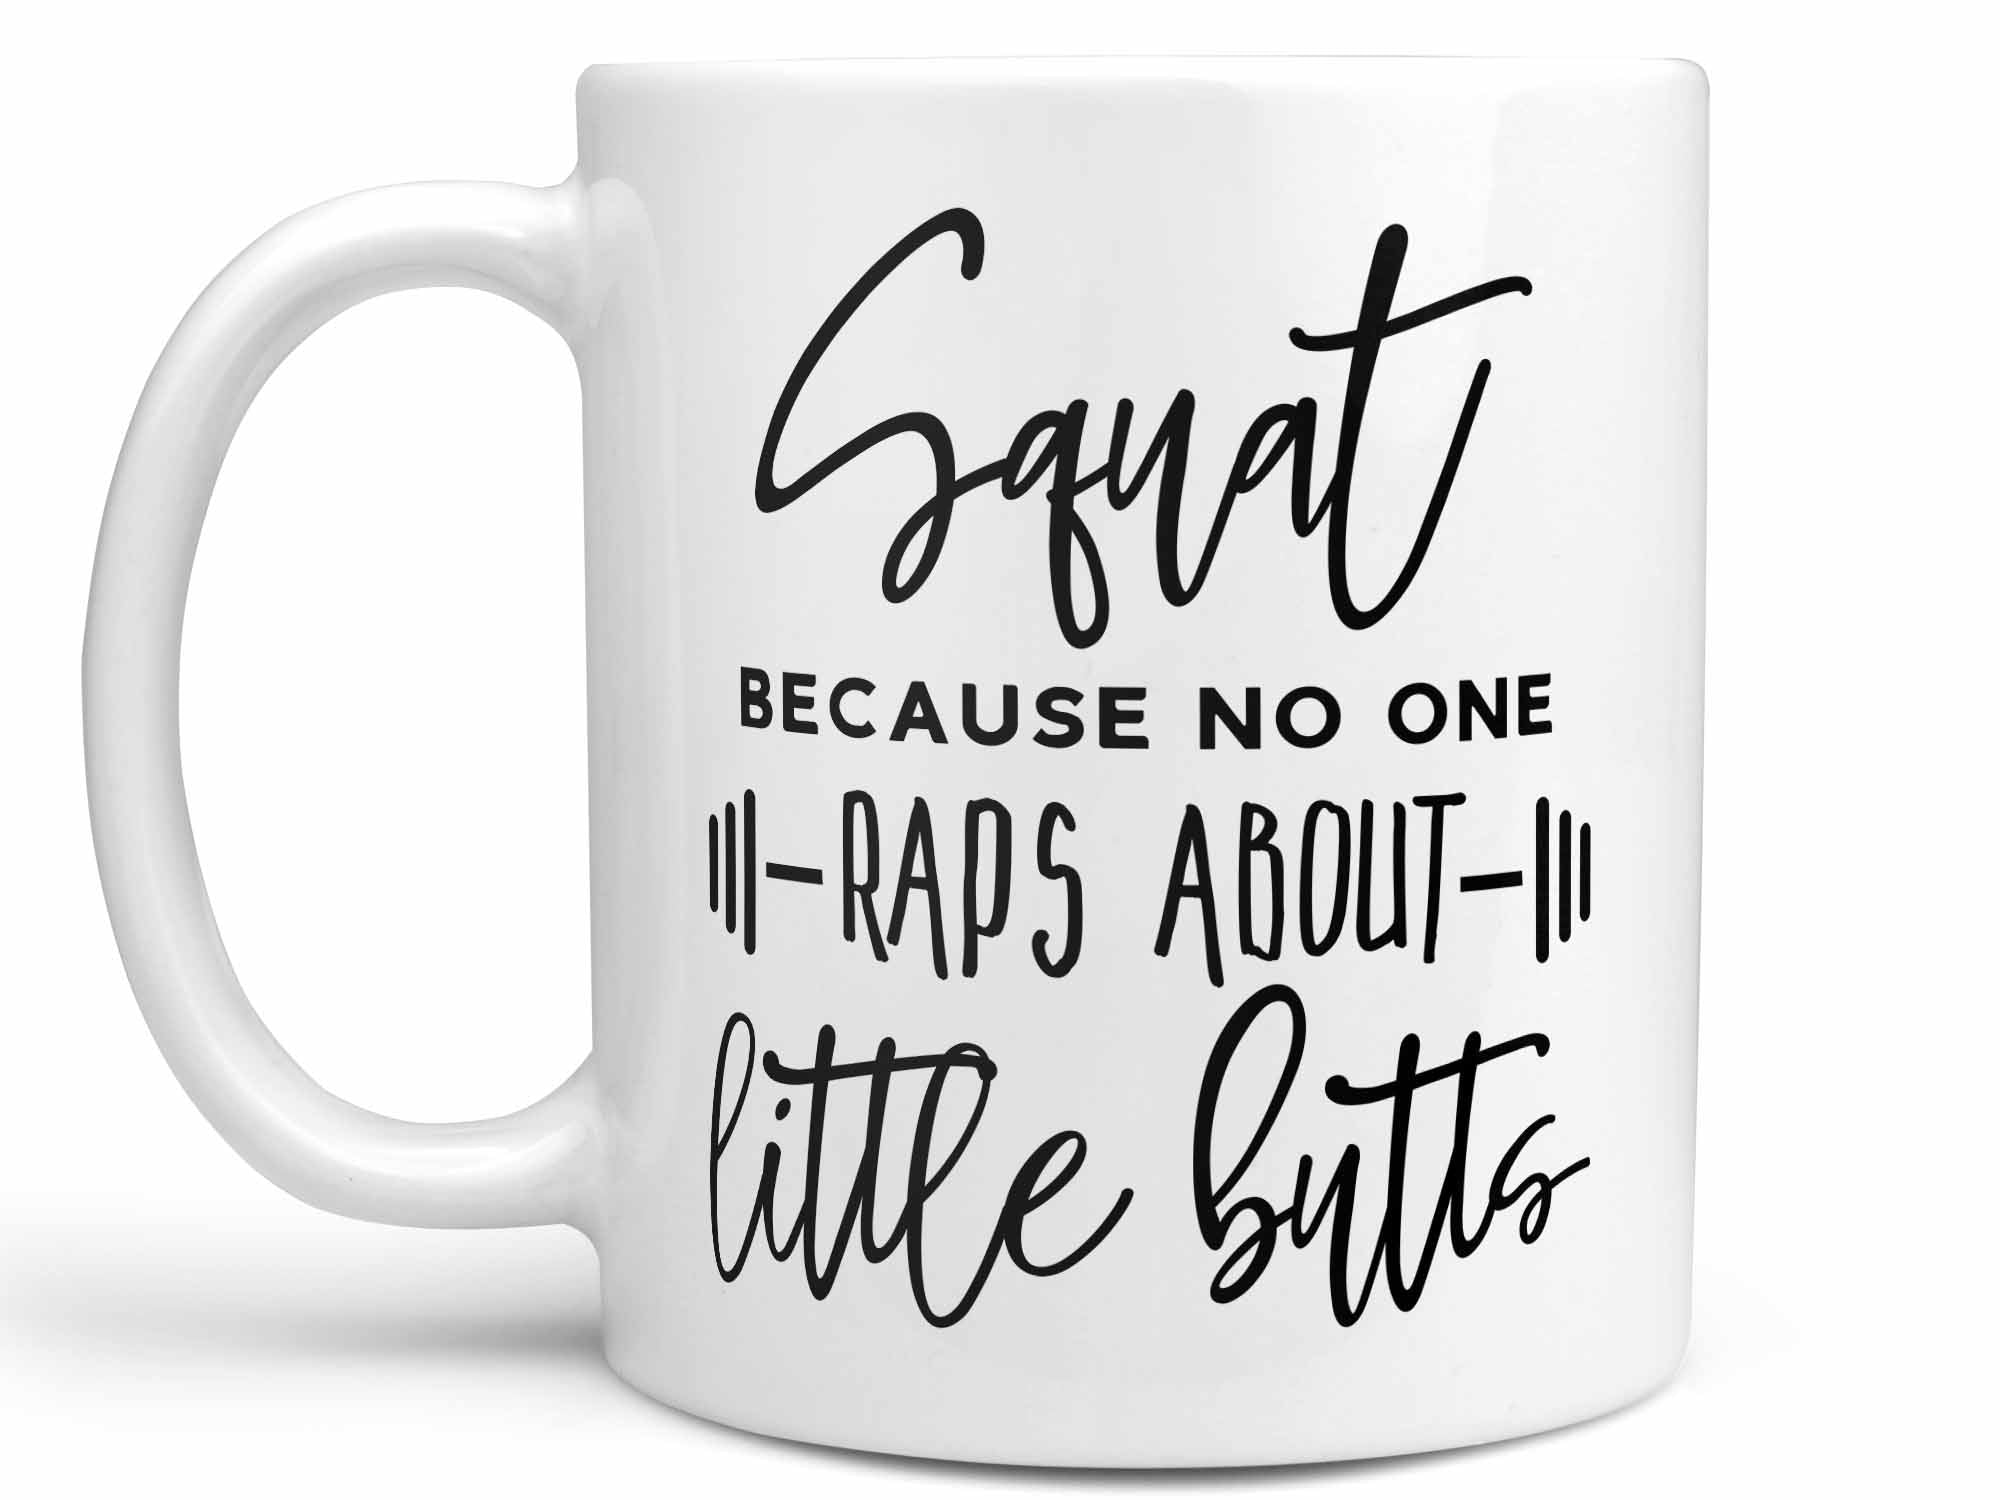 Squat Butts Coffee Mug,Coffee Mugs Never Lie,Coffee Mug